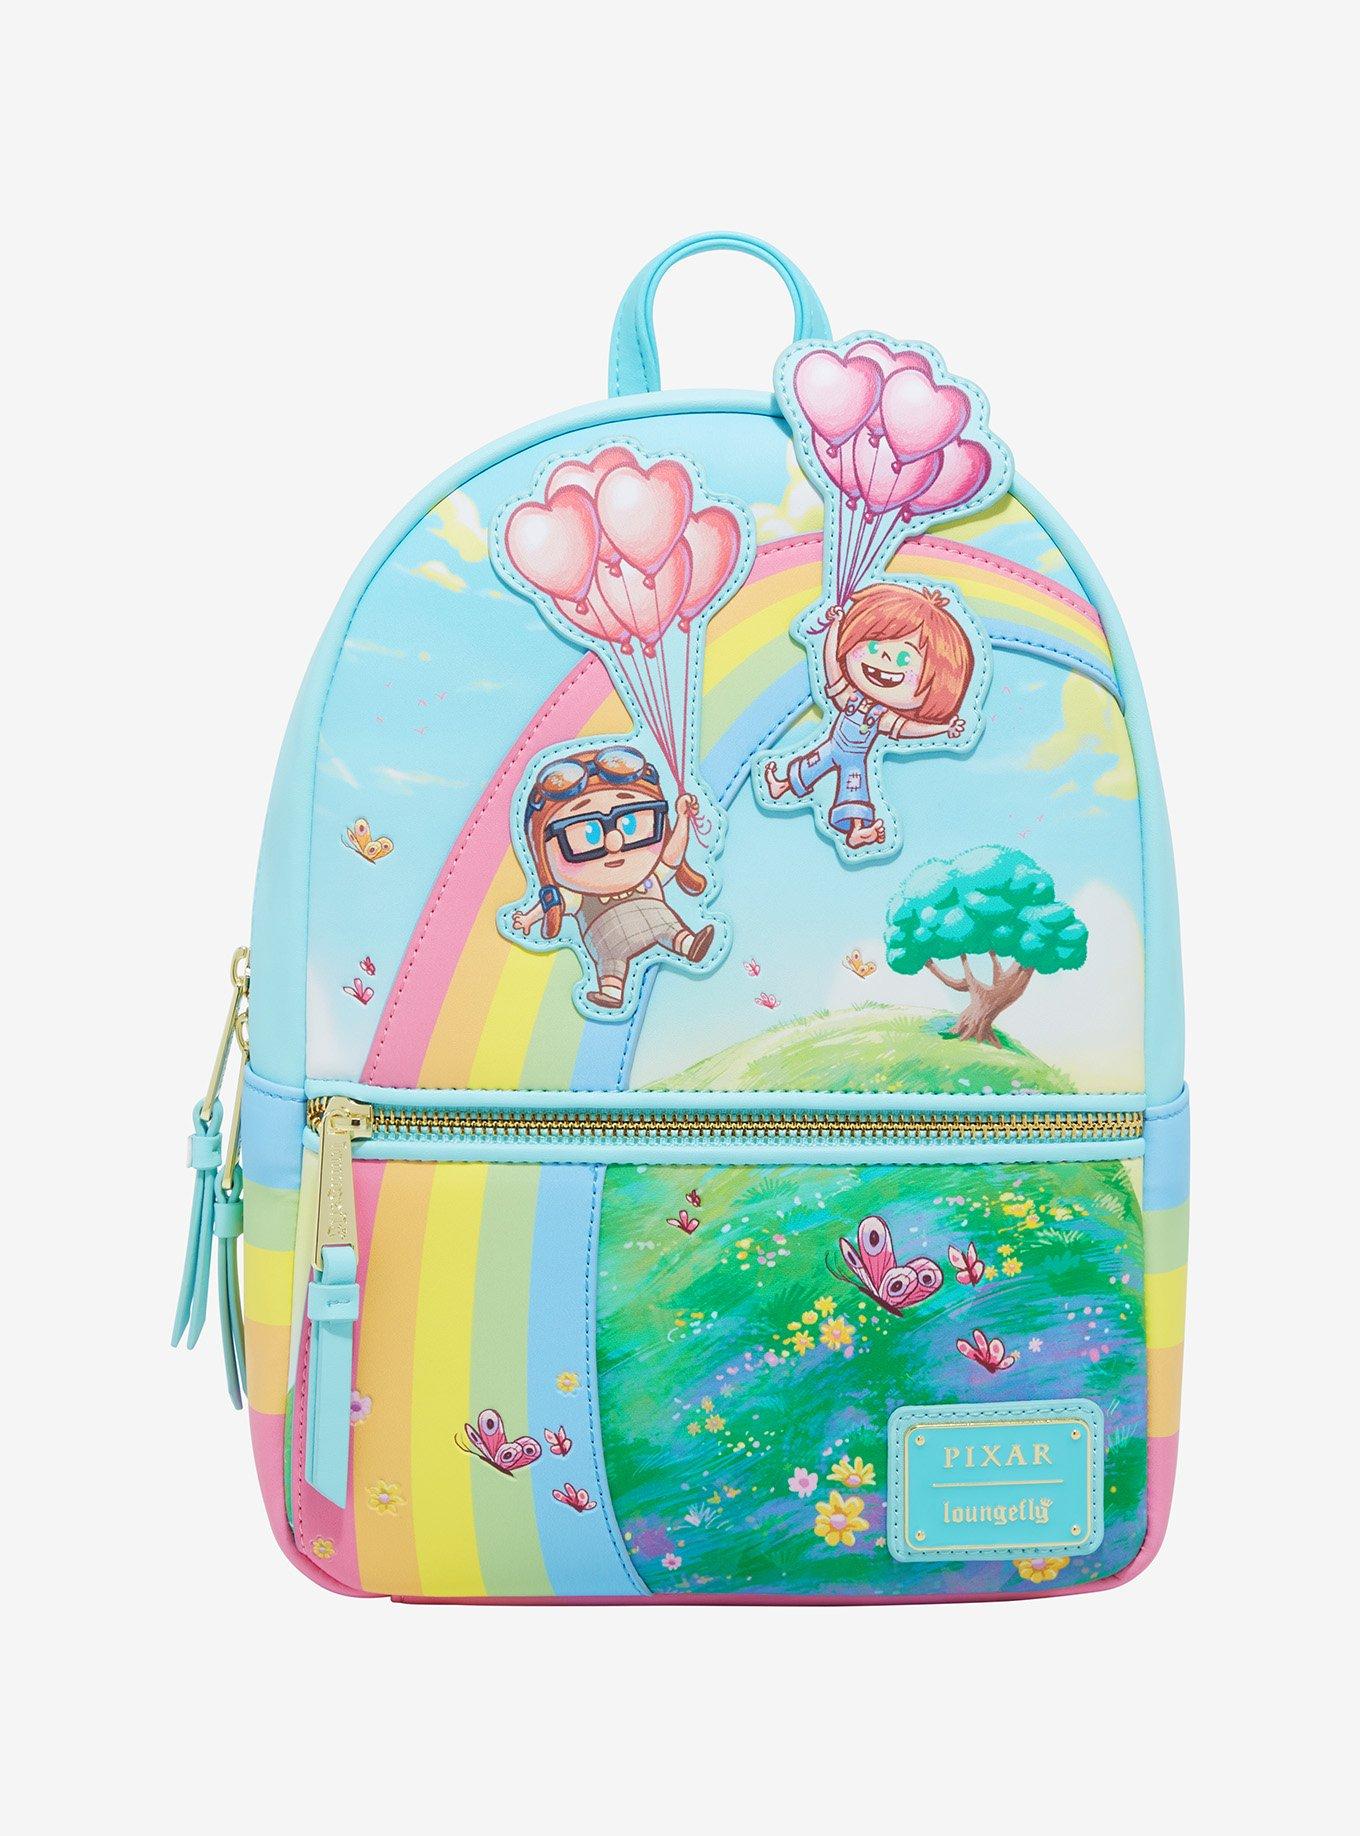 High-quality Rainbow Unicorn Star Backpack